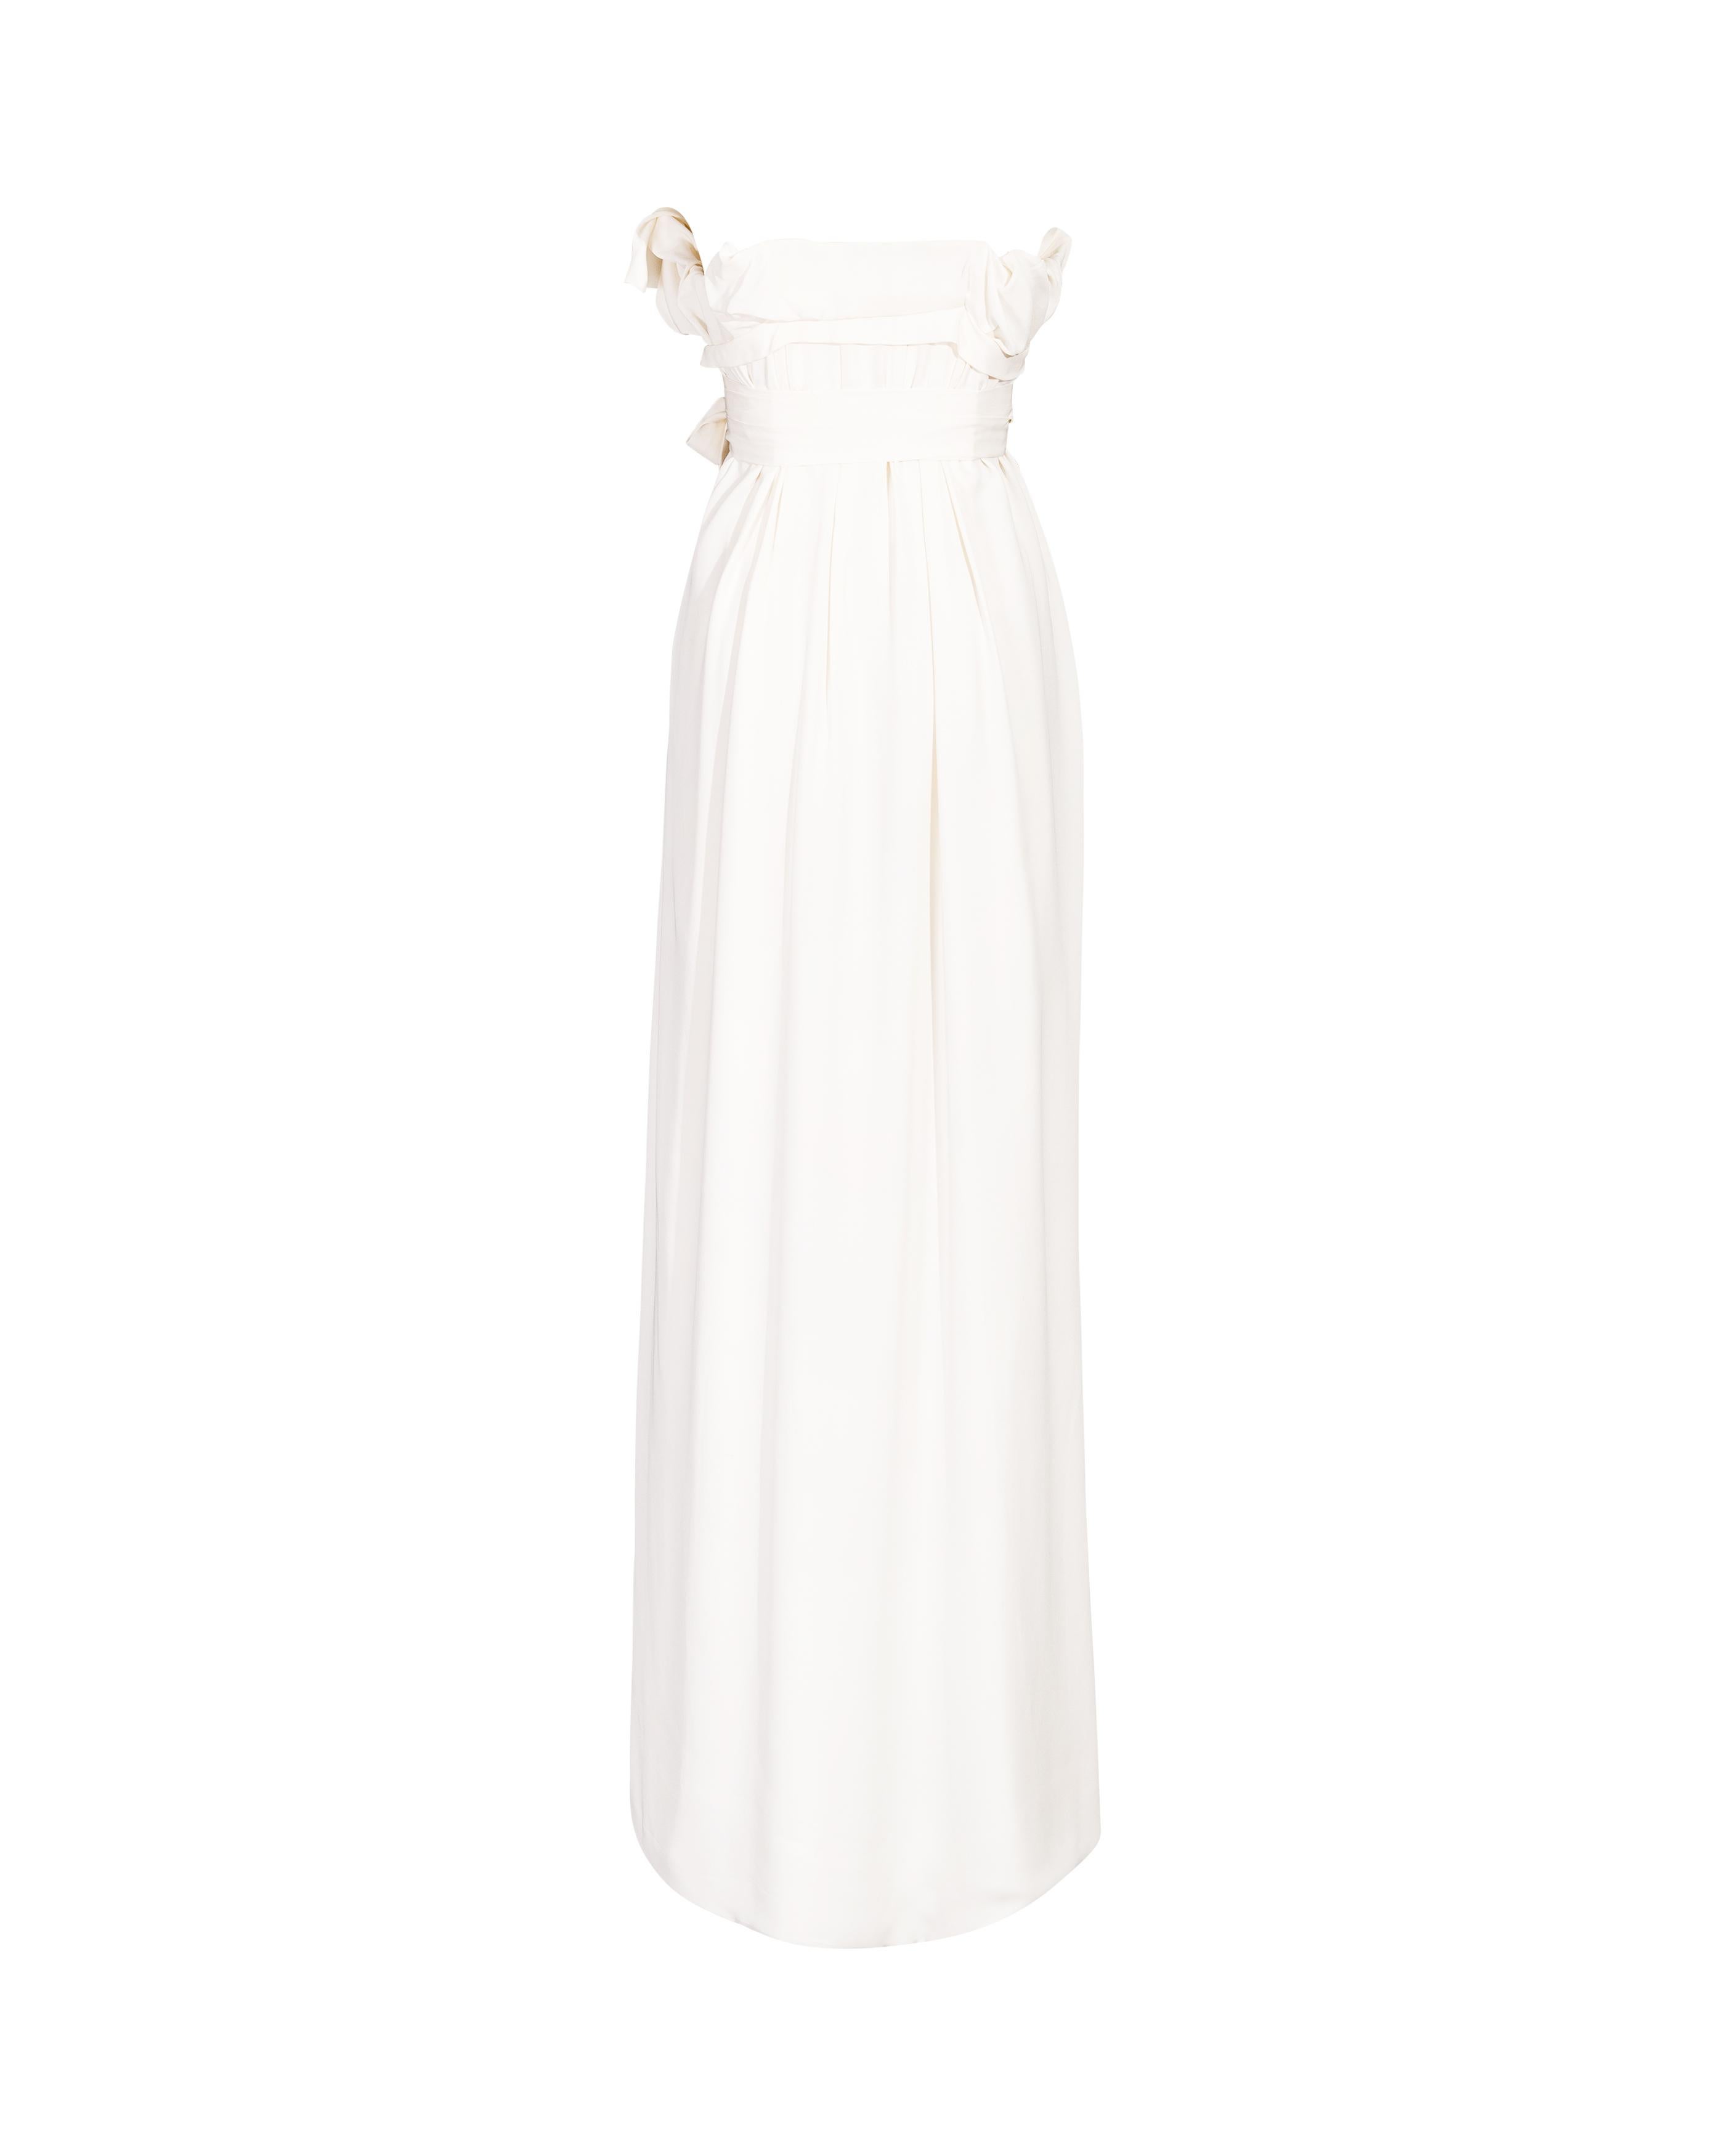 Women's S/S 2014 Vivienne Westwood White Strapless Silk Drape Gown